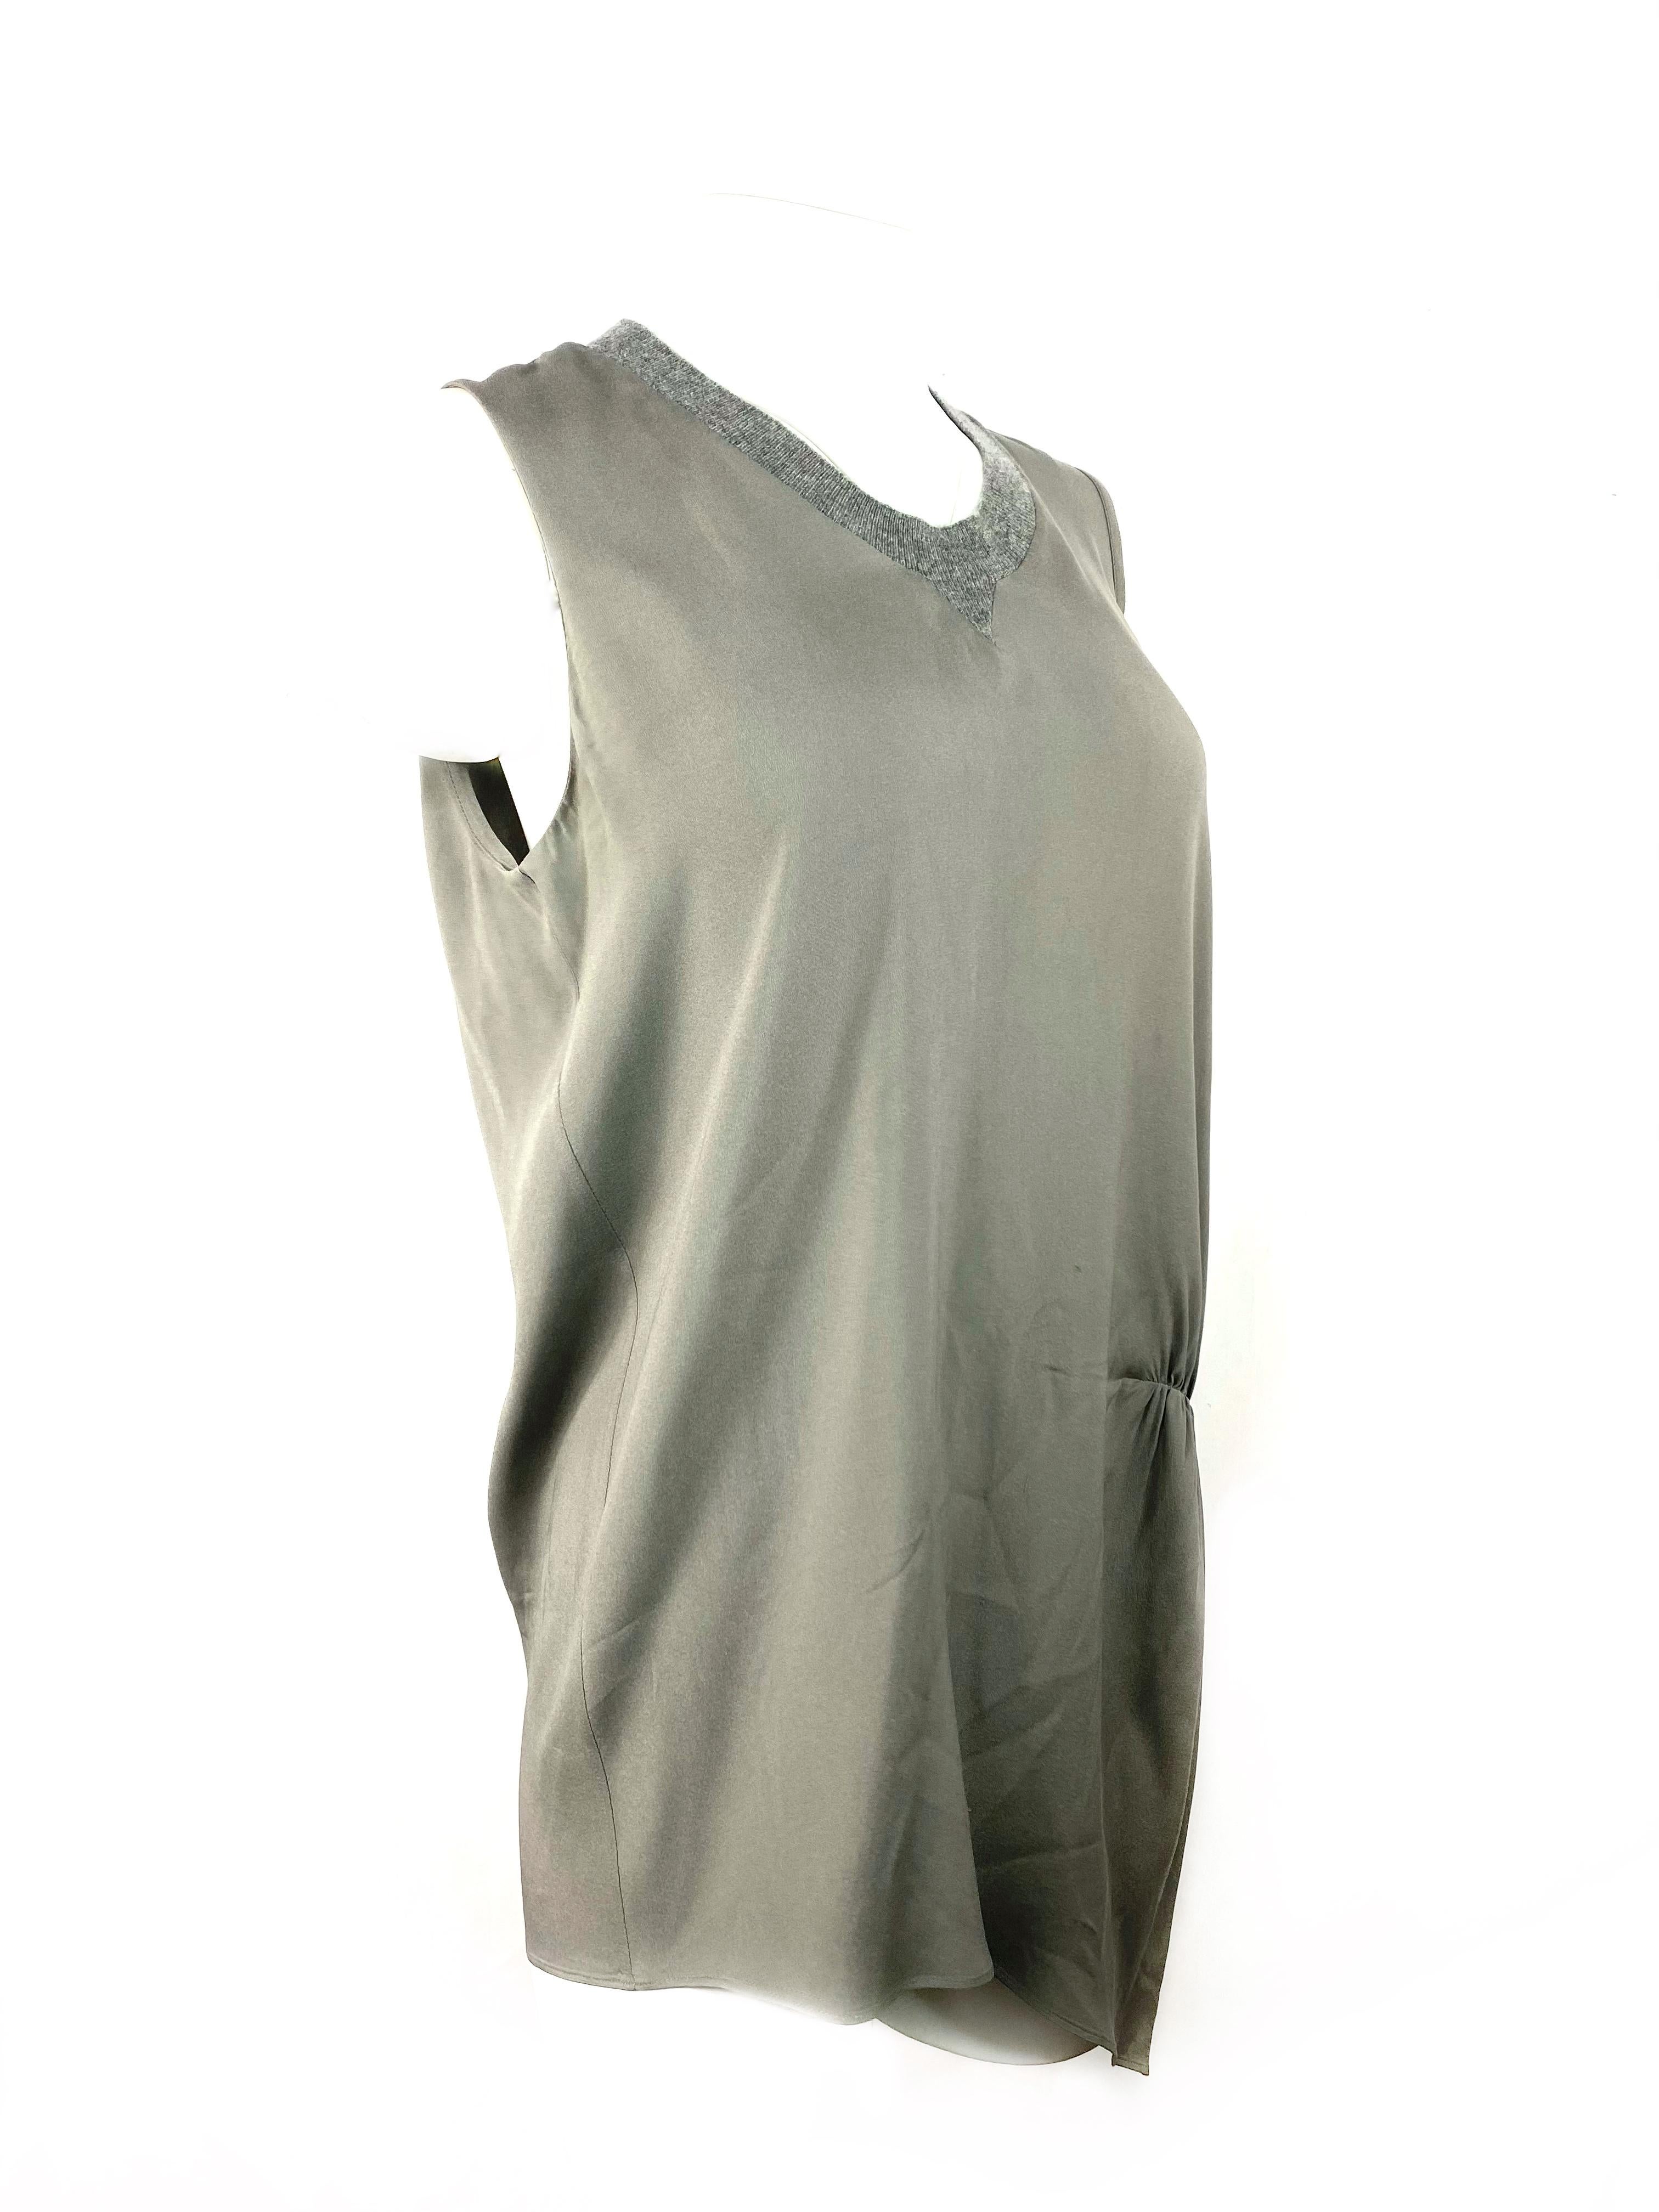 Brunello Cucinelli Grey Silk Sleeveless Blouse Top Size XL For Sale 1